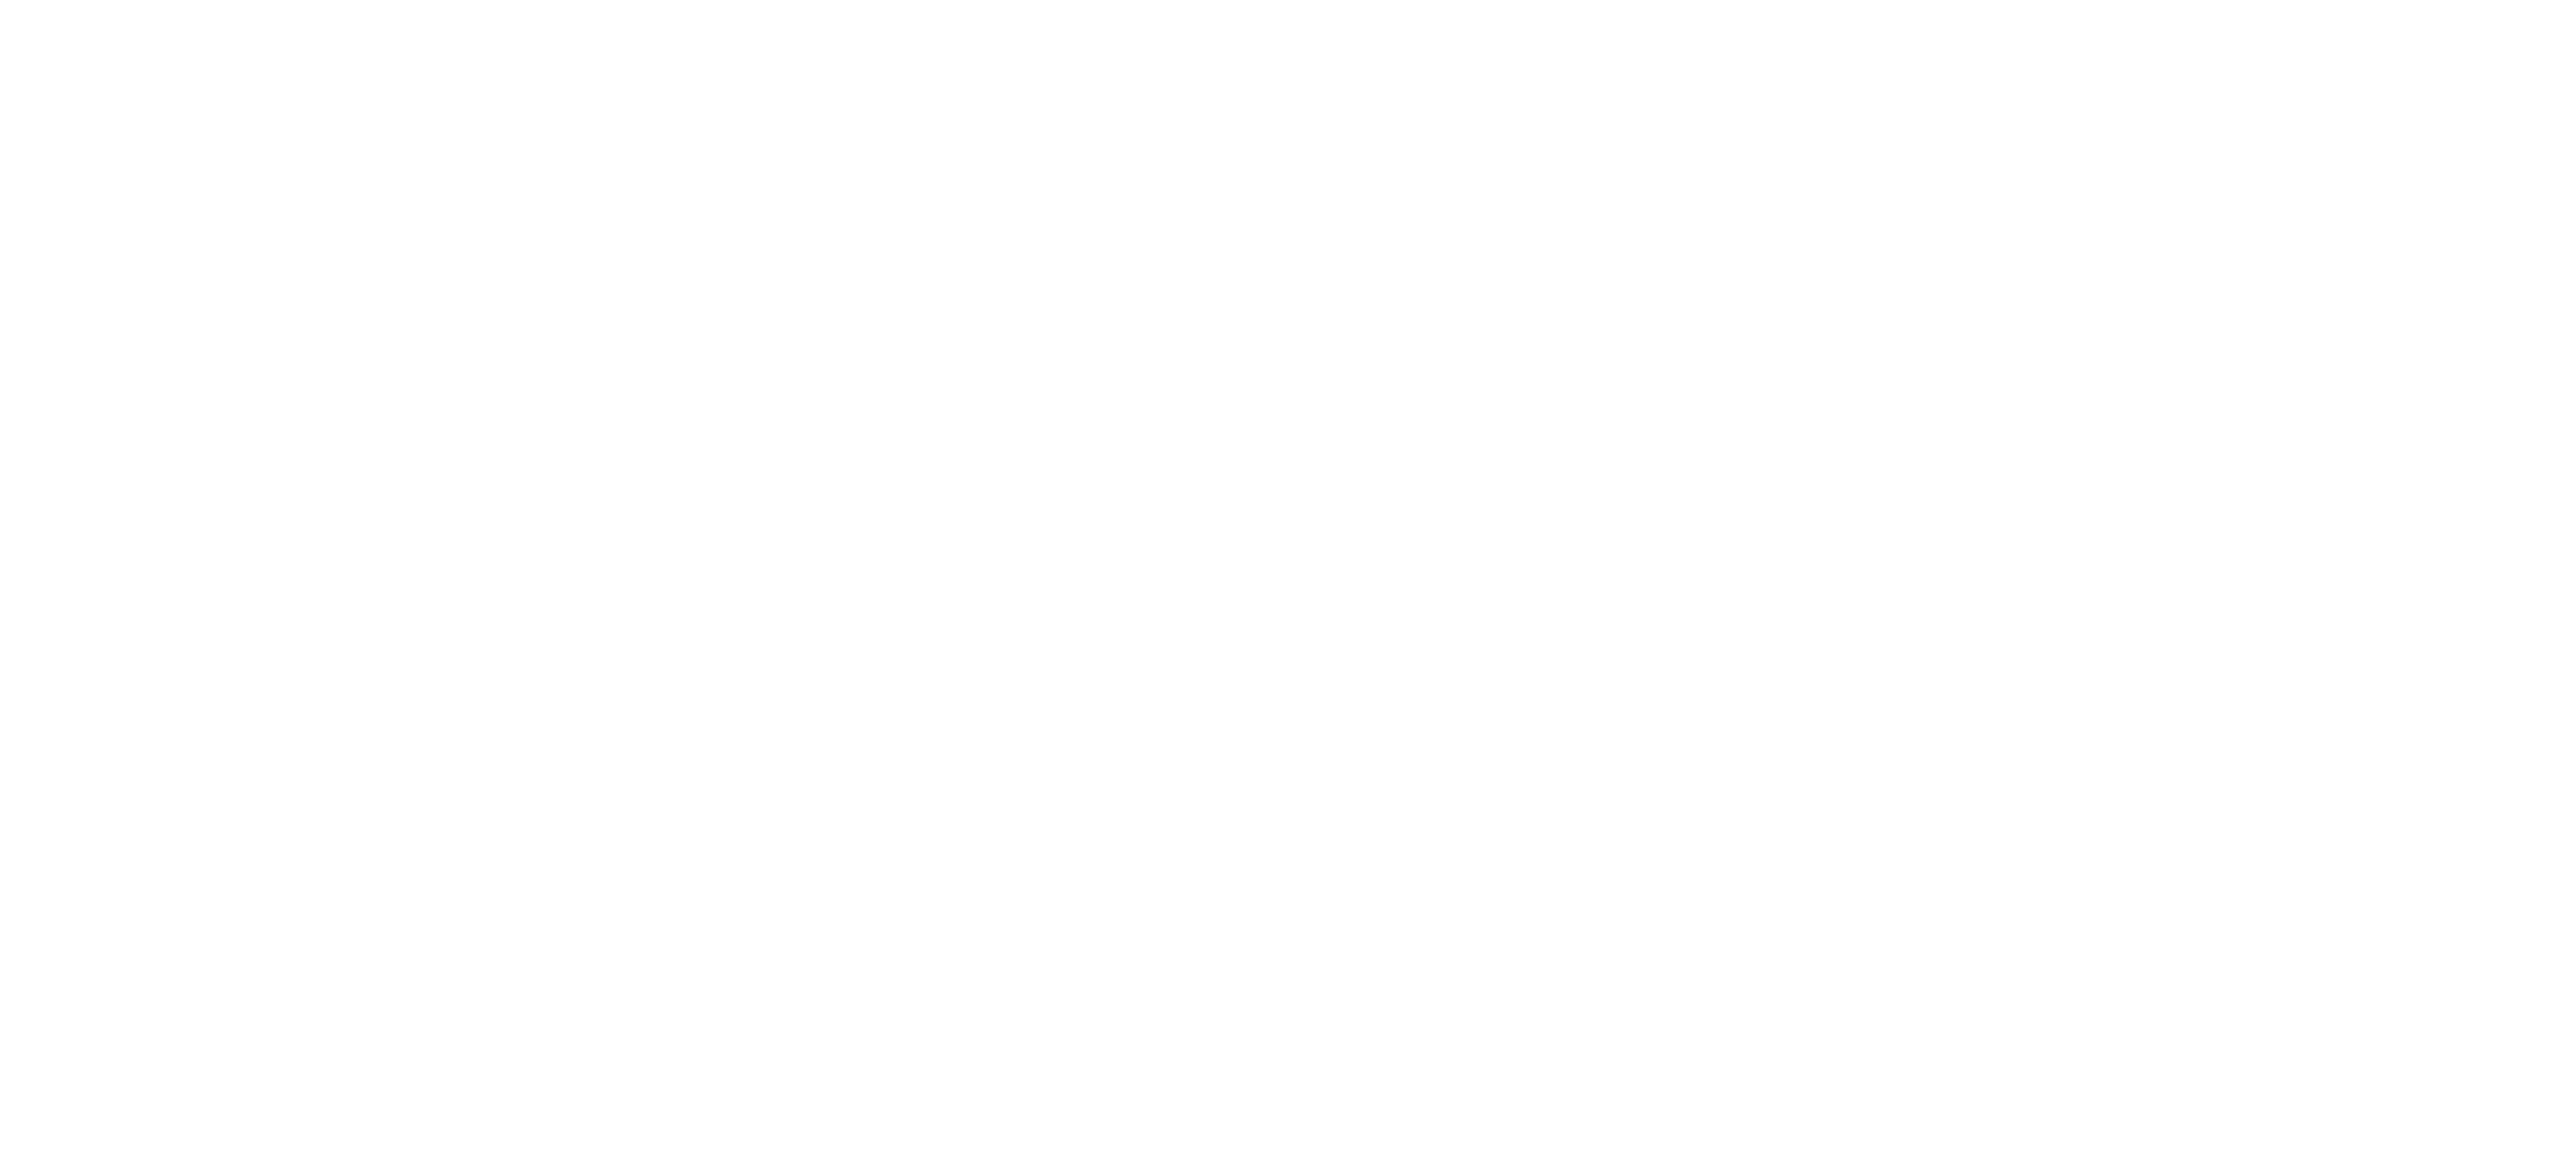 MASDA Liverpool